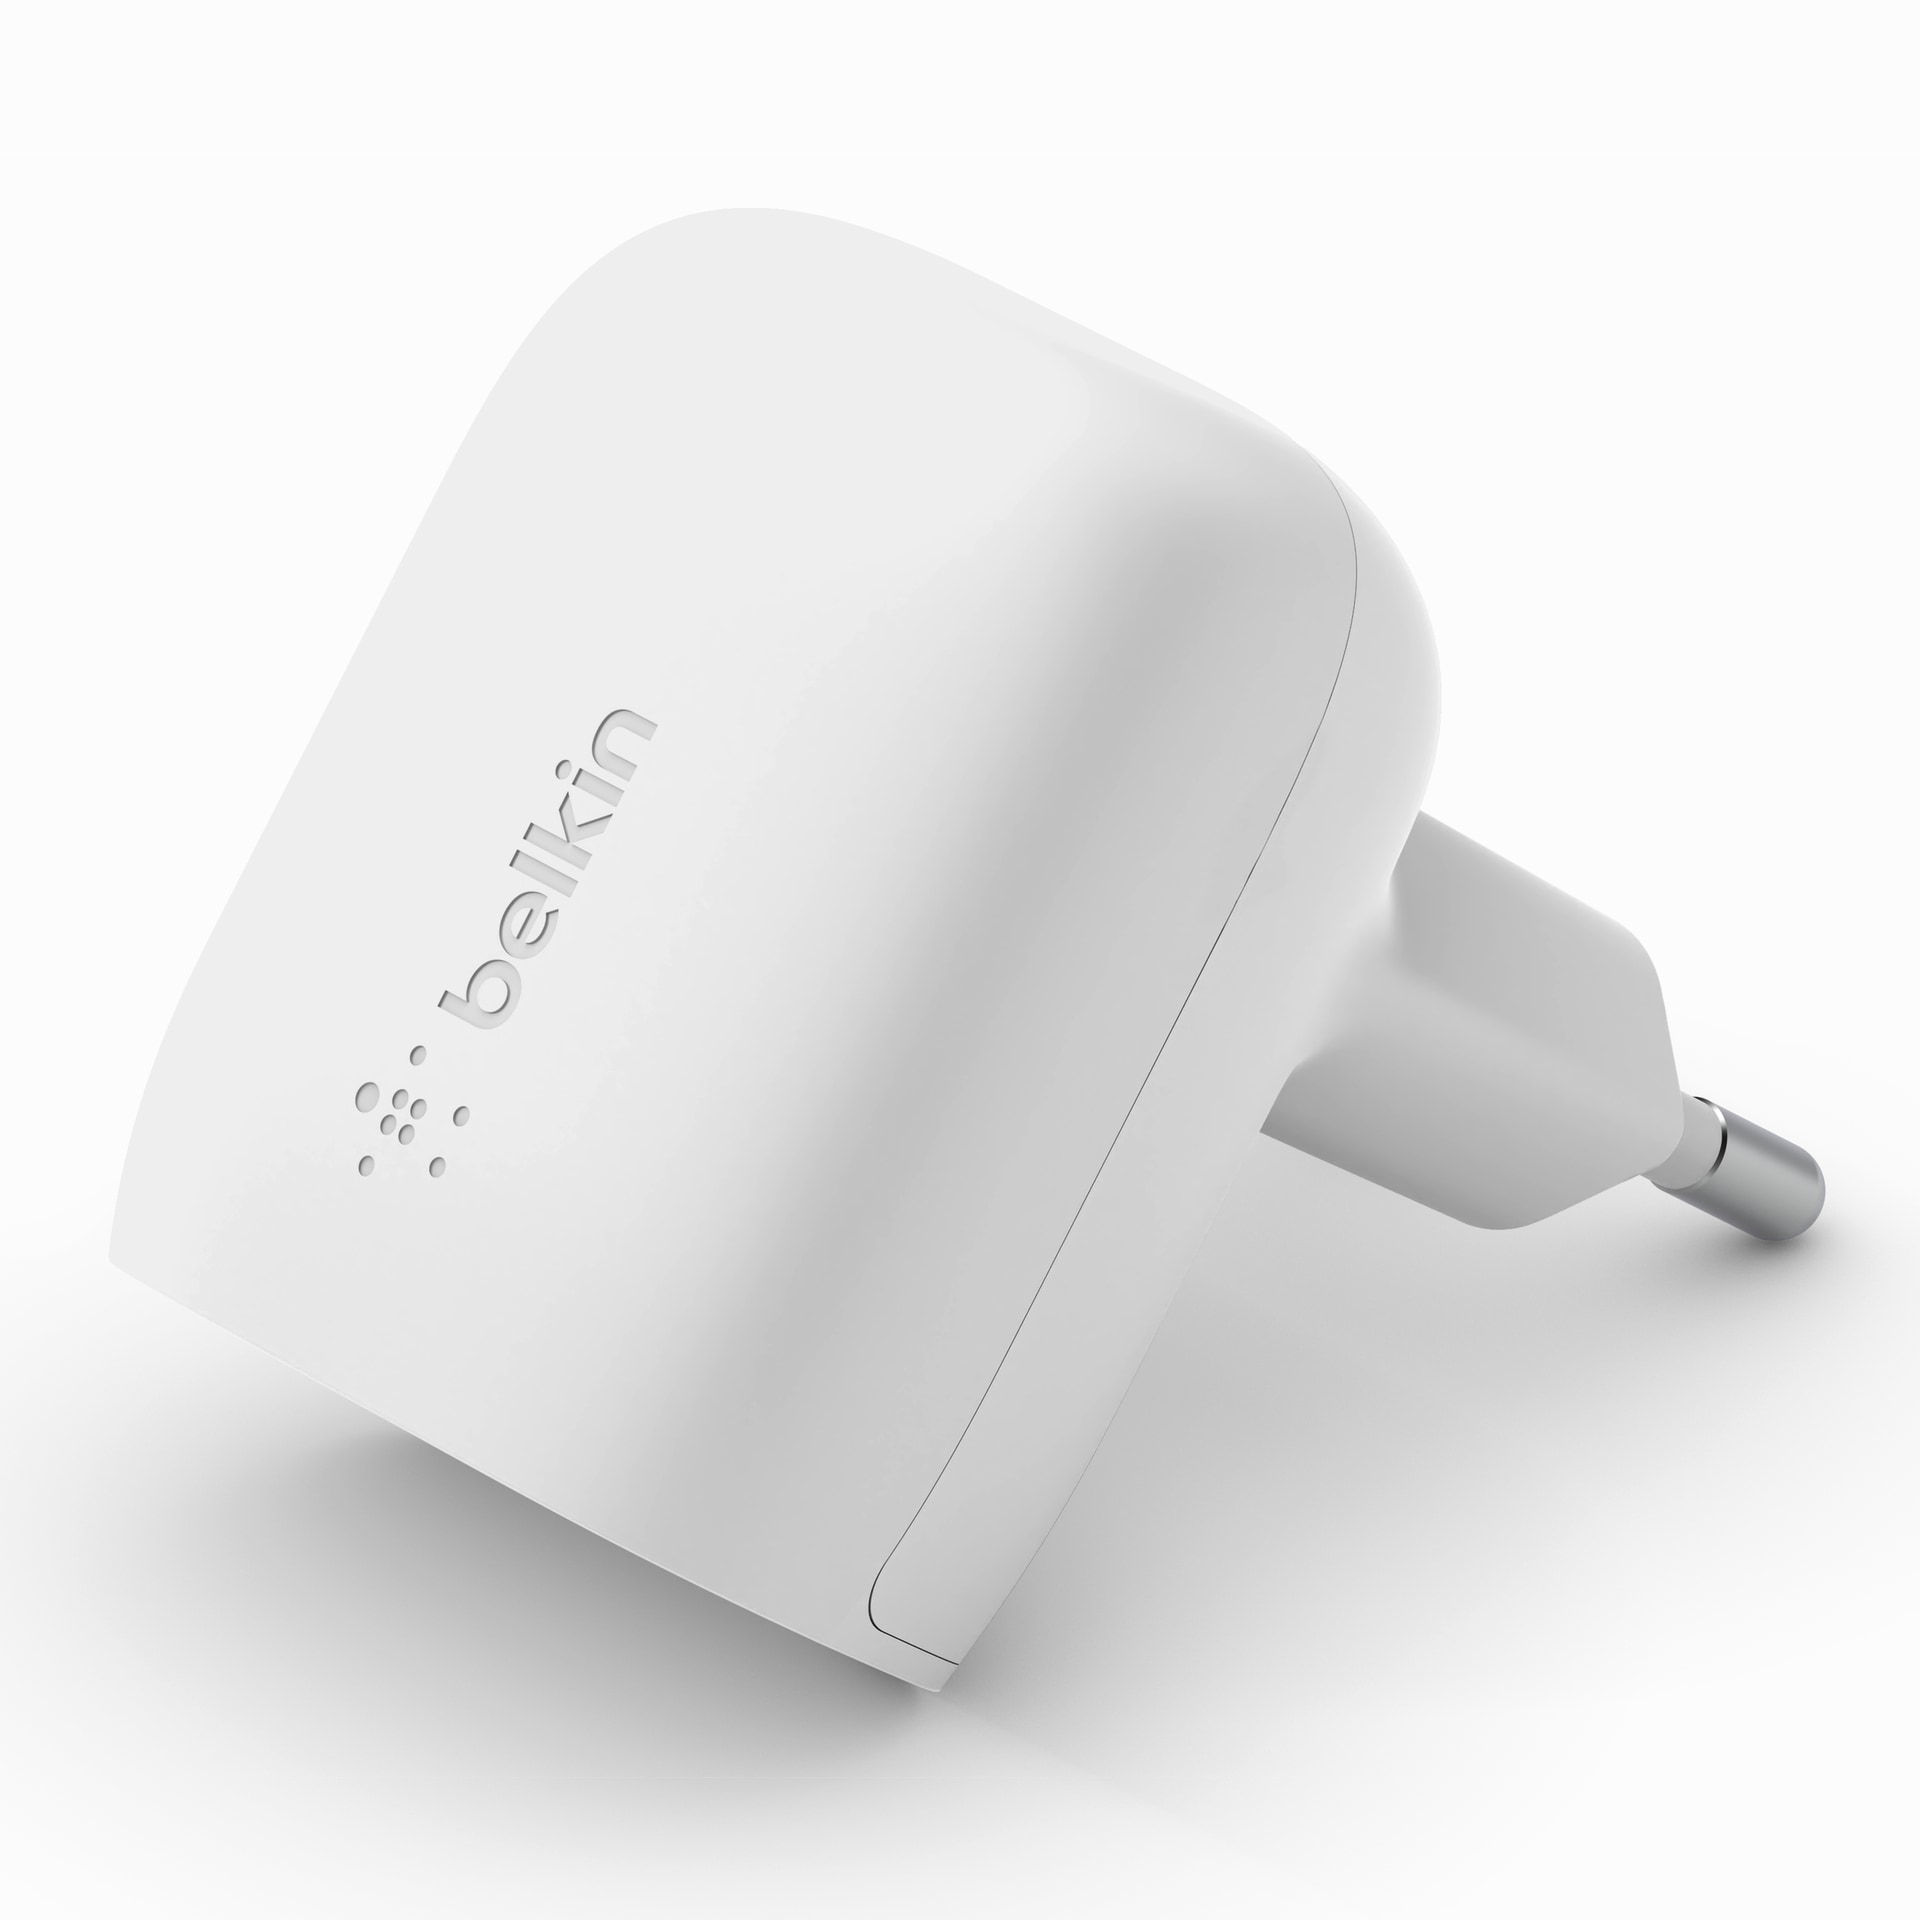 Belkin USB-Ladegerät »BoostCharge 20 Watt USB-C Ladegerät mit Power Delivery 3.1«, (Charger/Netzteil für iPhone, iPad, Samsung Galaxy/Note, Google Pixel)